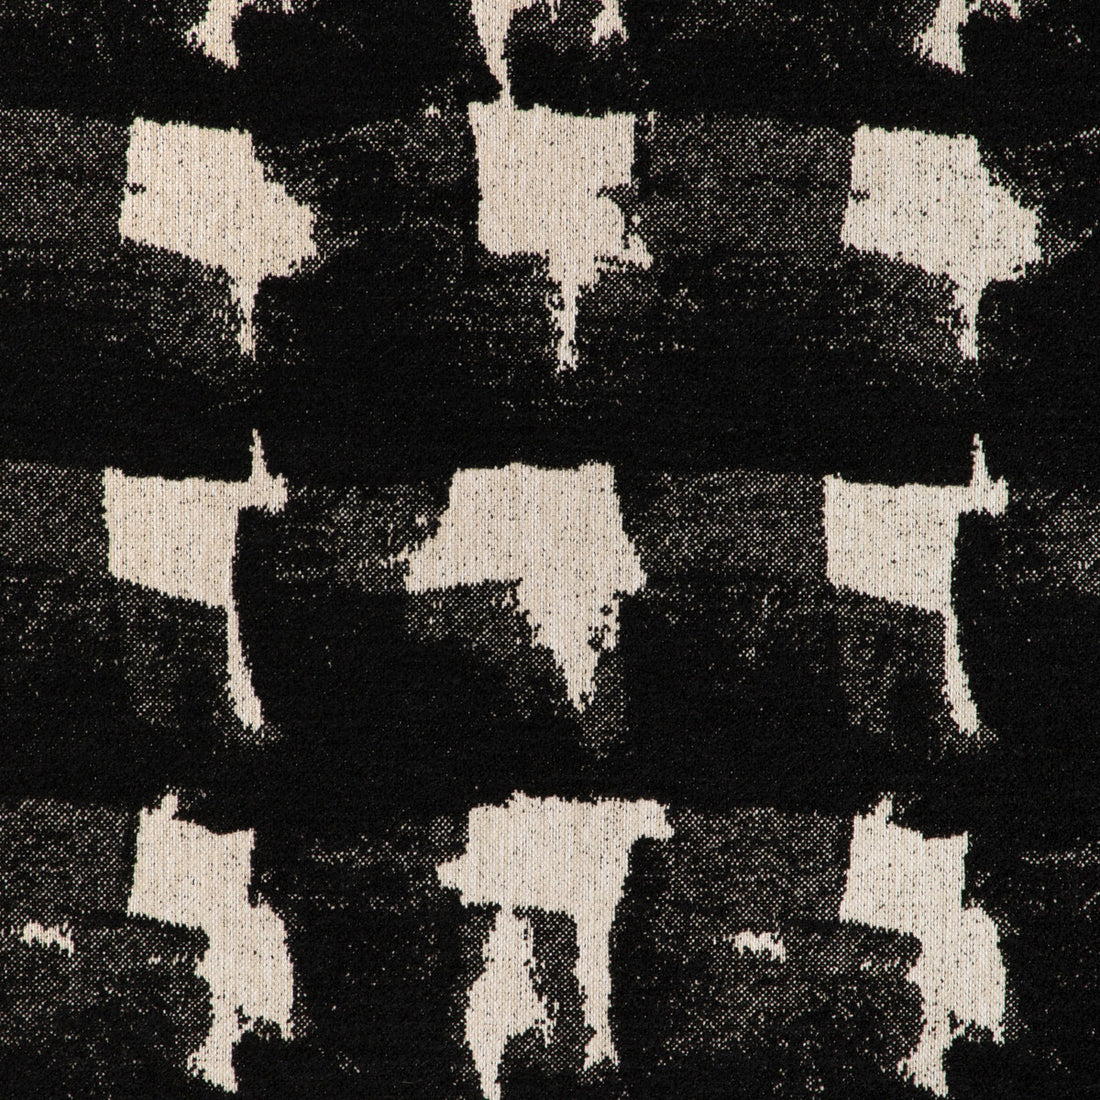 Les Falaises Weave fabric in noir color - pattern 8024118.8.0 - by Brunschwig &amp; Fils in the Les Ensembliers L&